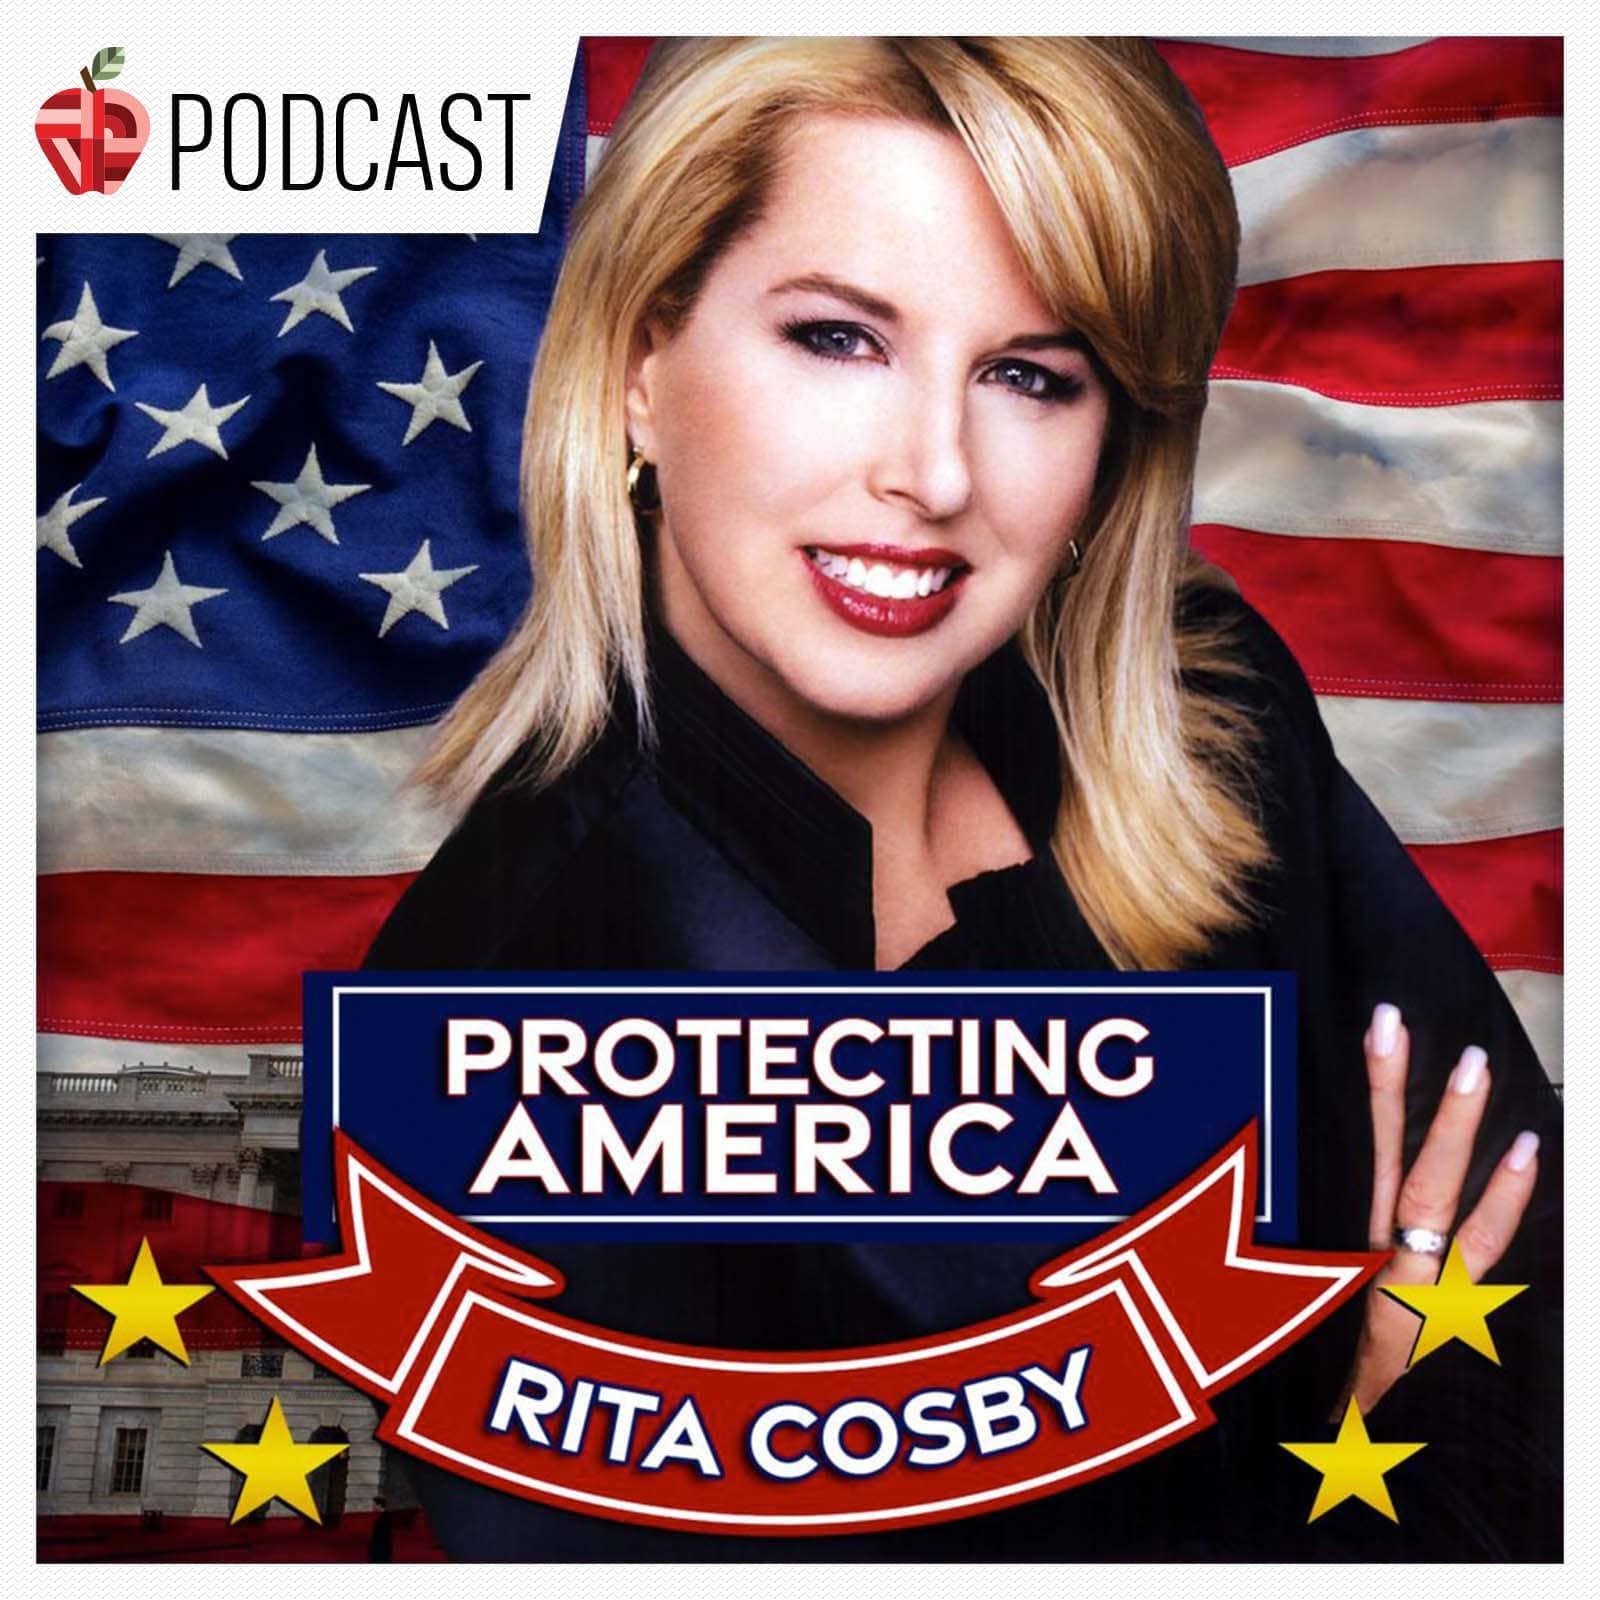 rita-cosby-protecting-america-correct-podcast-new-logo-50